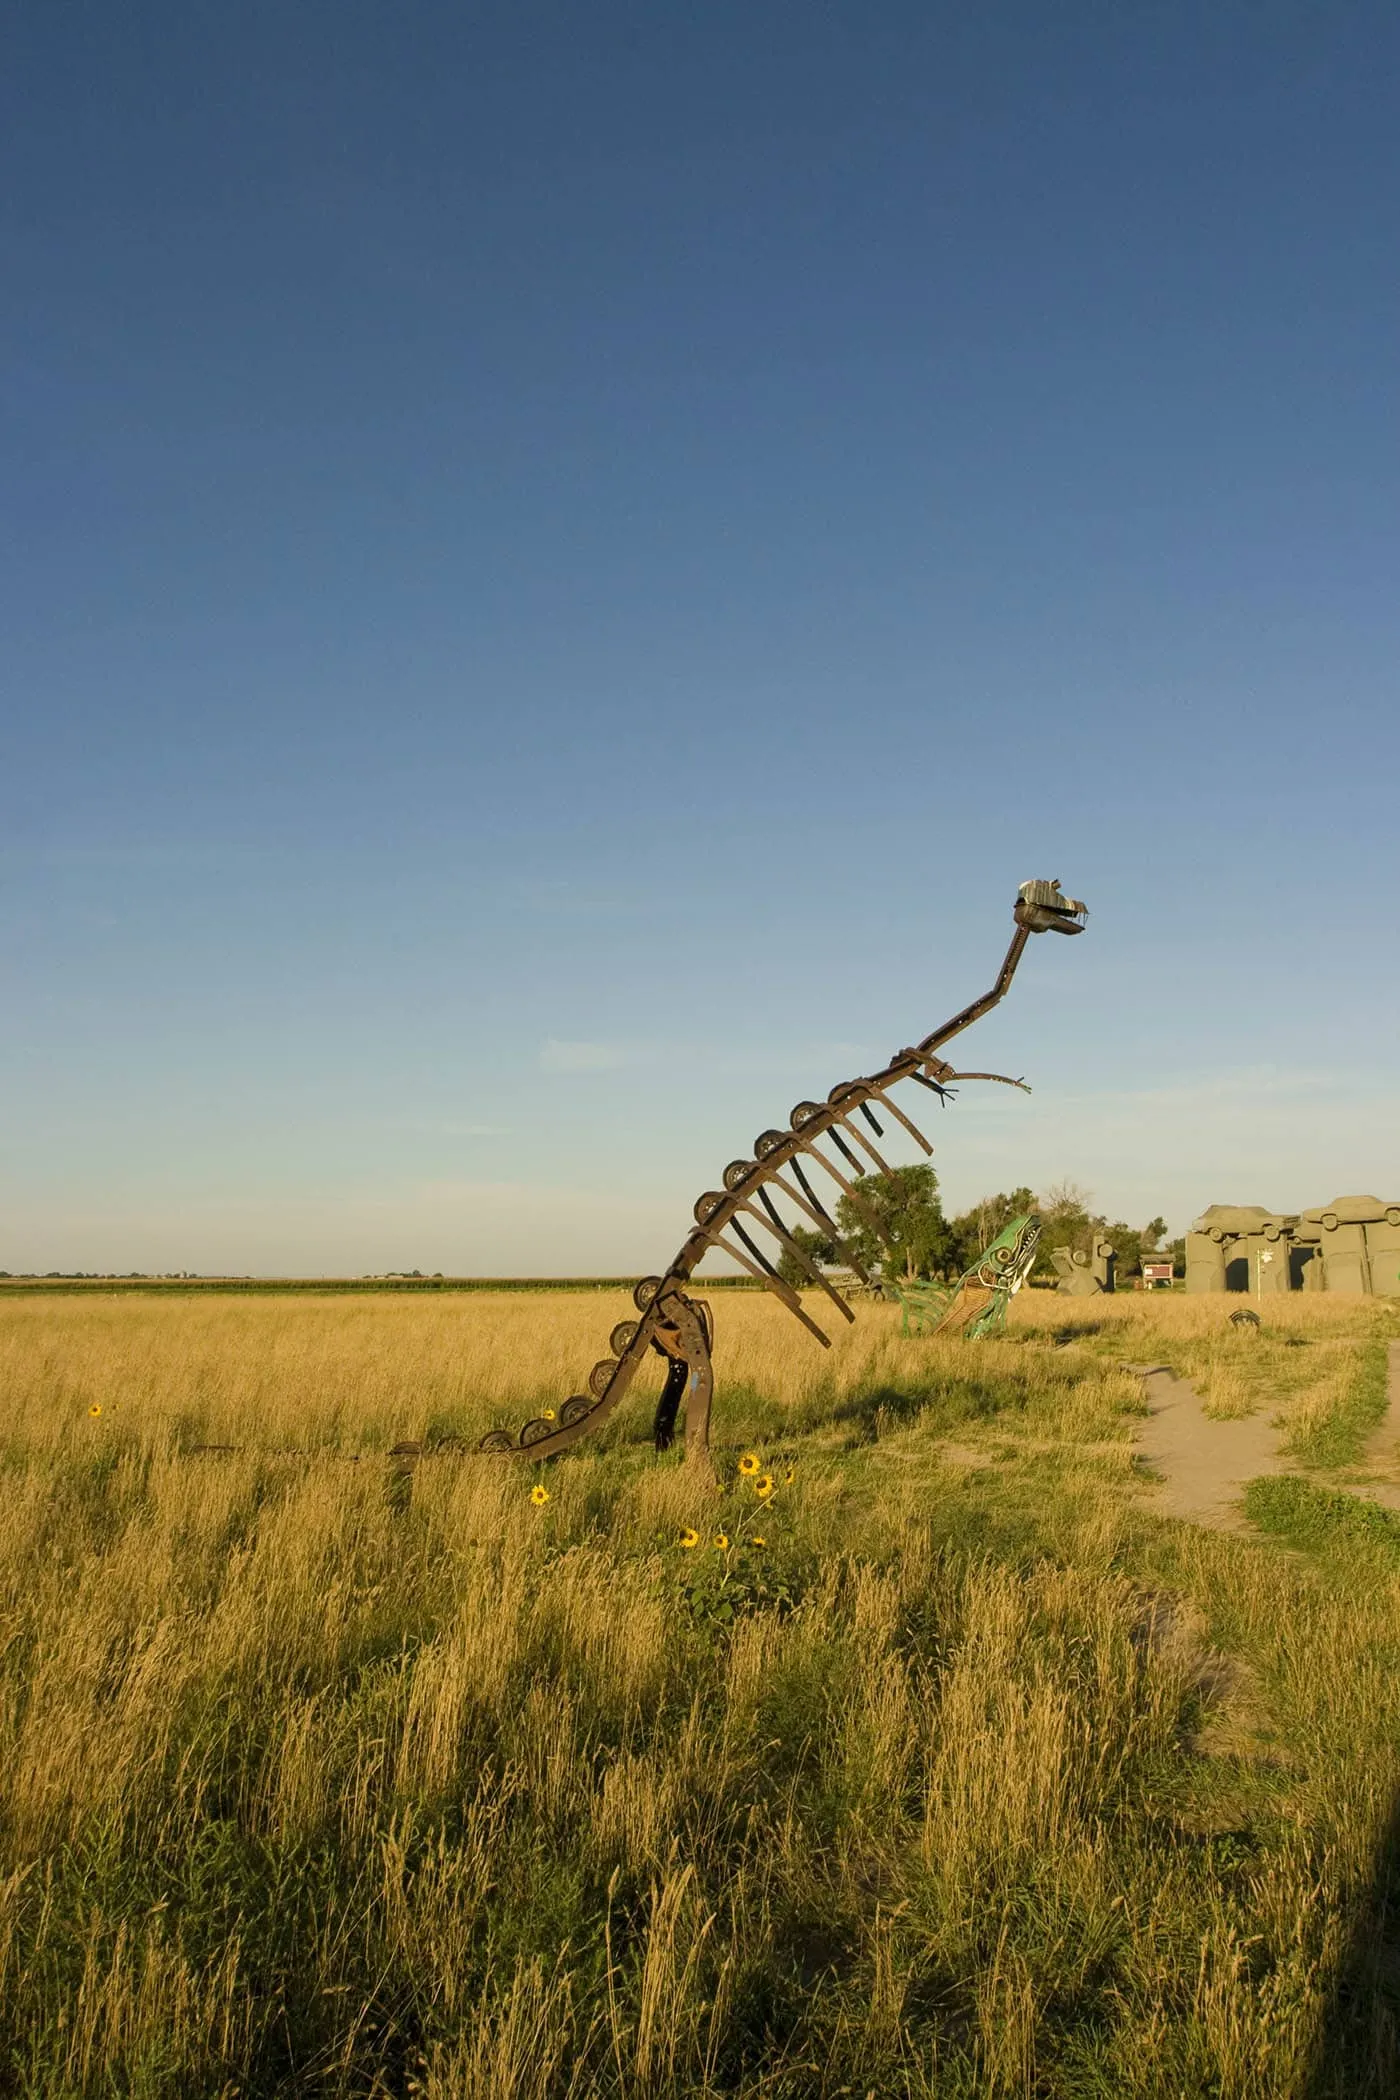 Dino sculpture at Carhenge Roadside Attraction in Alliance, Nebraska